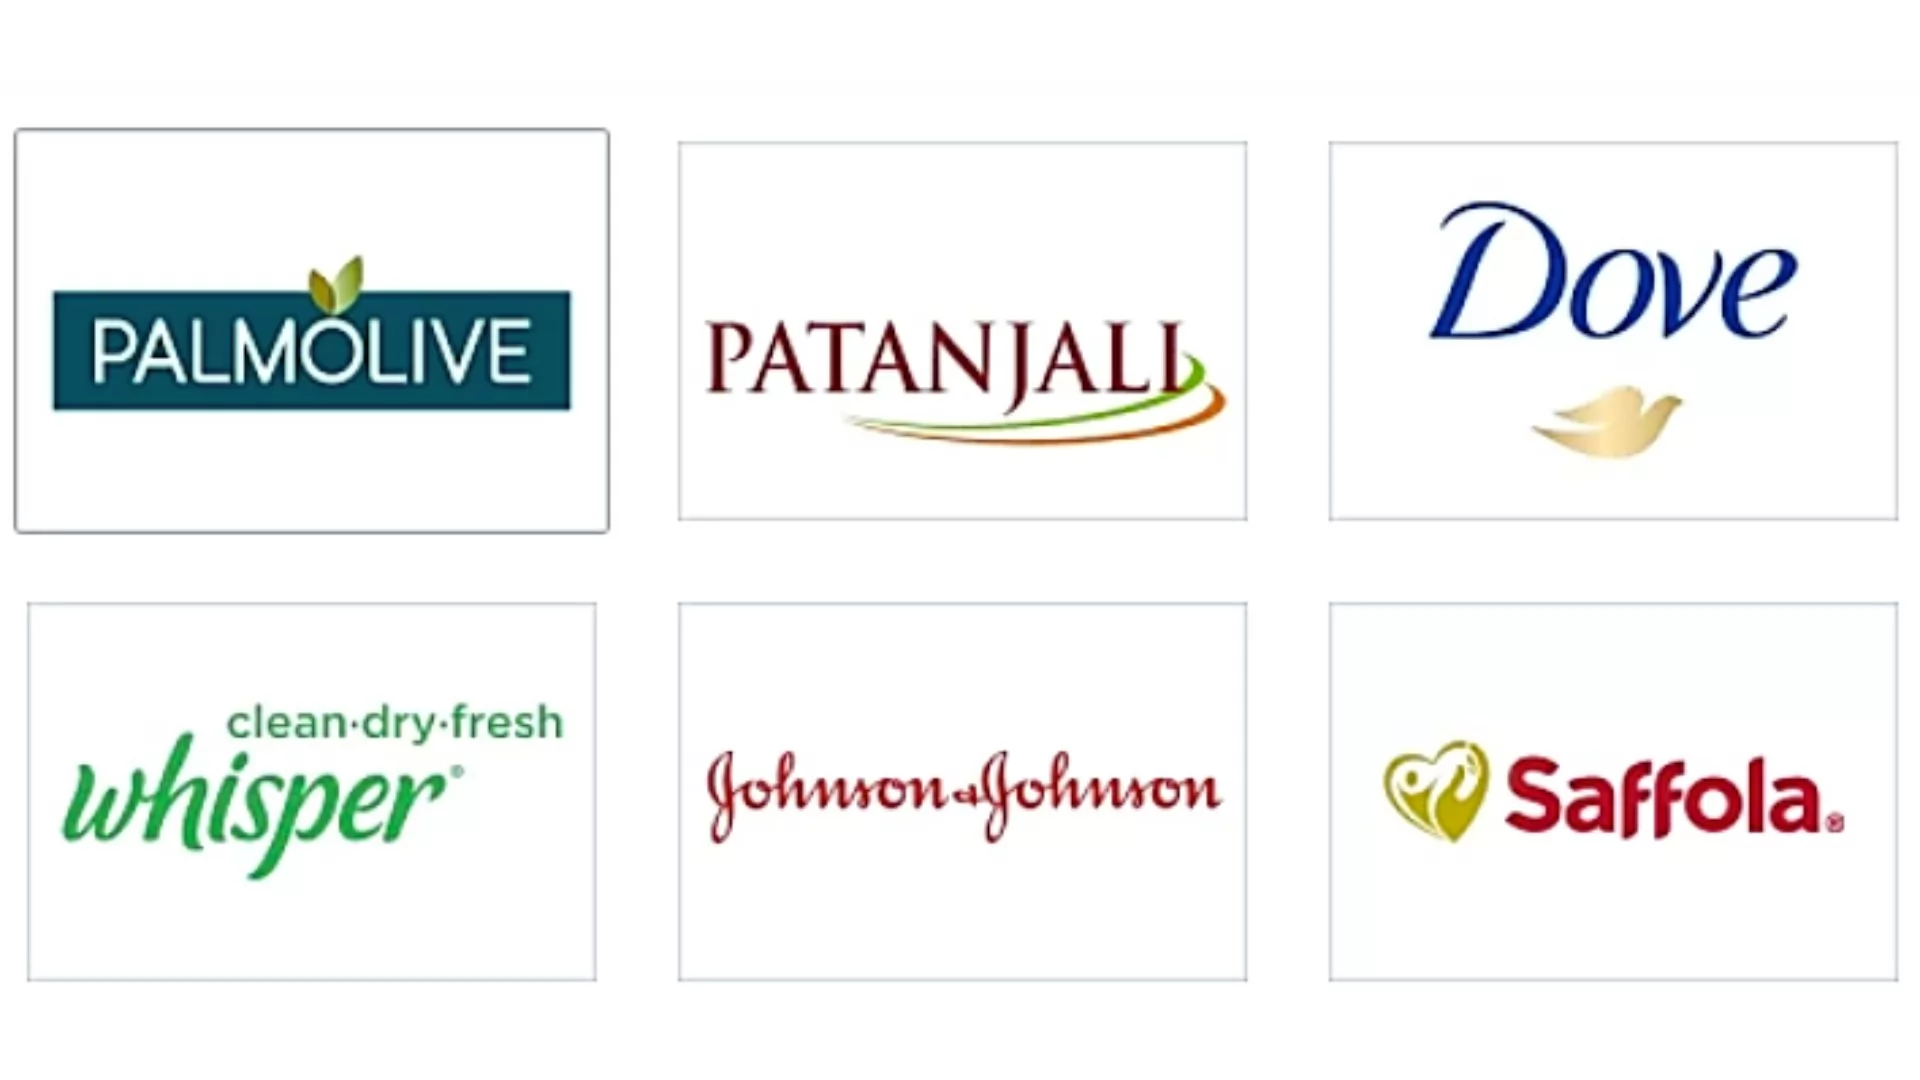 Flipkart Grocery offers on Popular brands